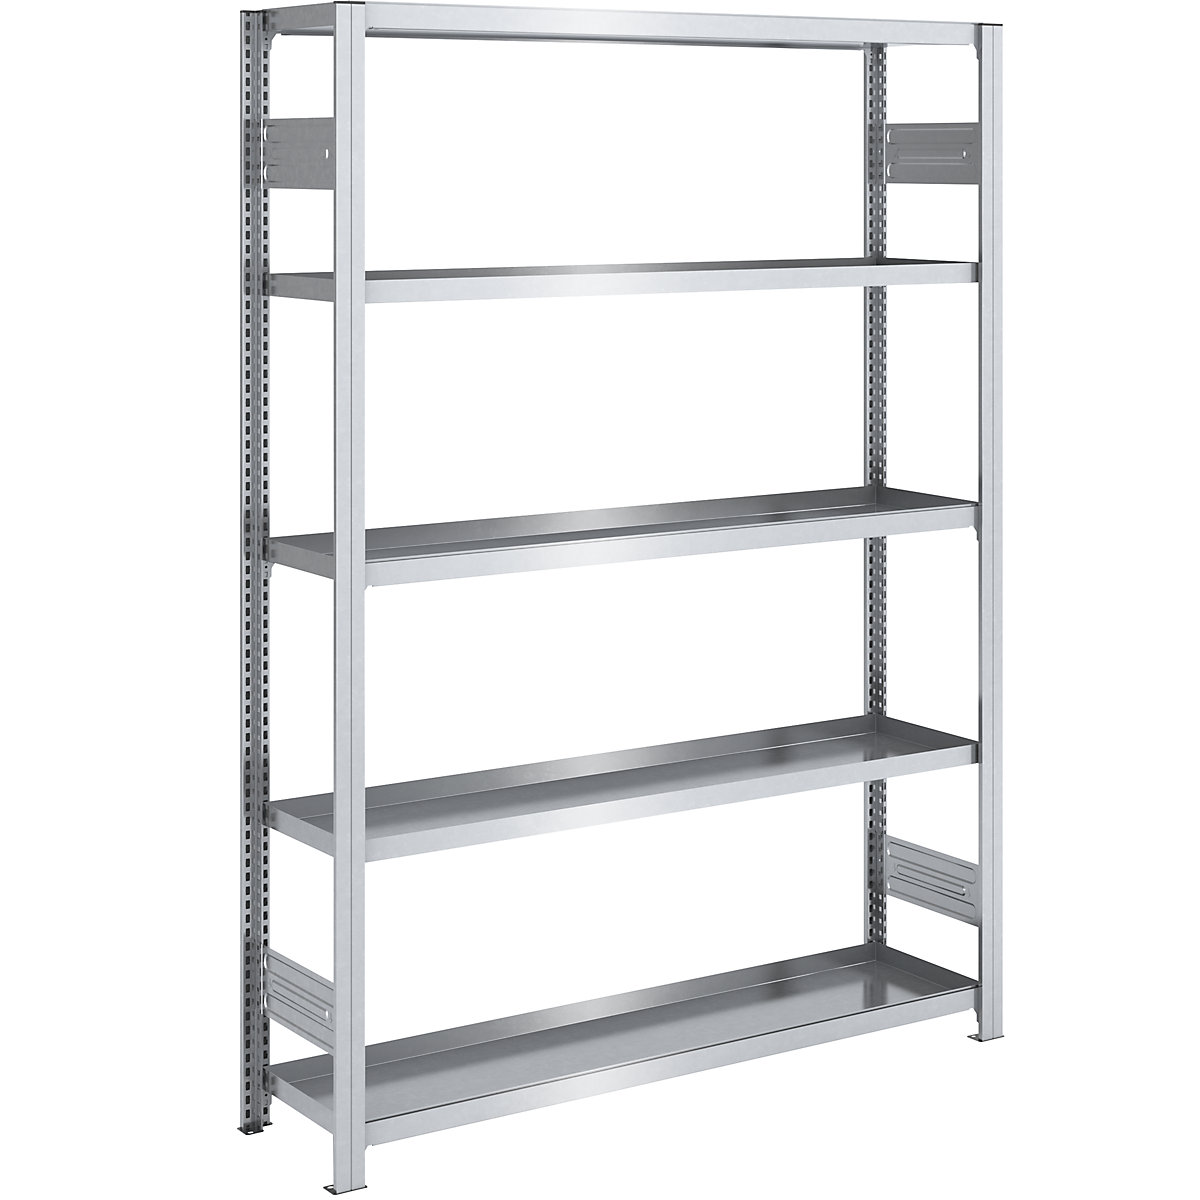 Tray shelf unit – hofe, shelf unit height 2000 mm, tray width 1300 mm, tray depth 400 mm, standard shelf unit